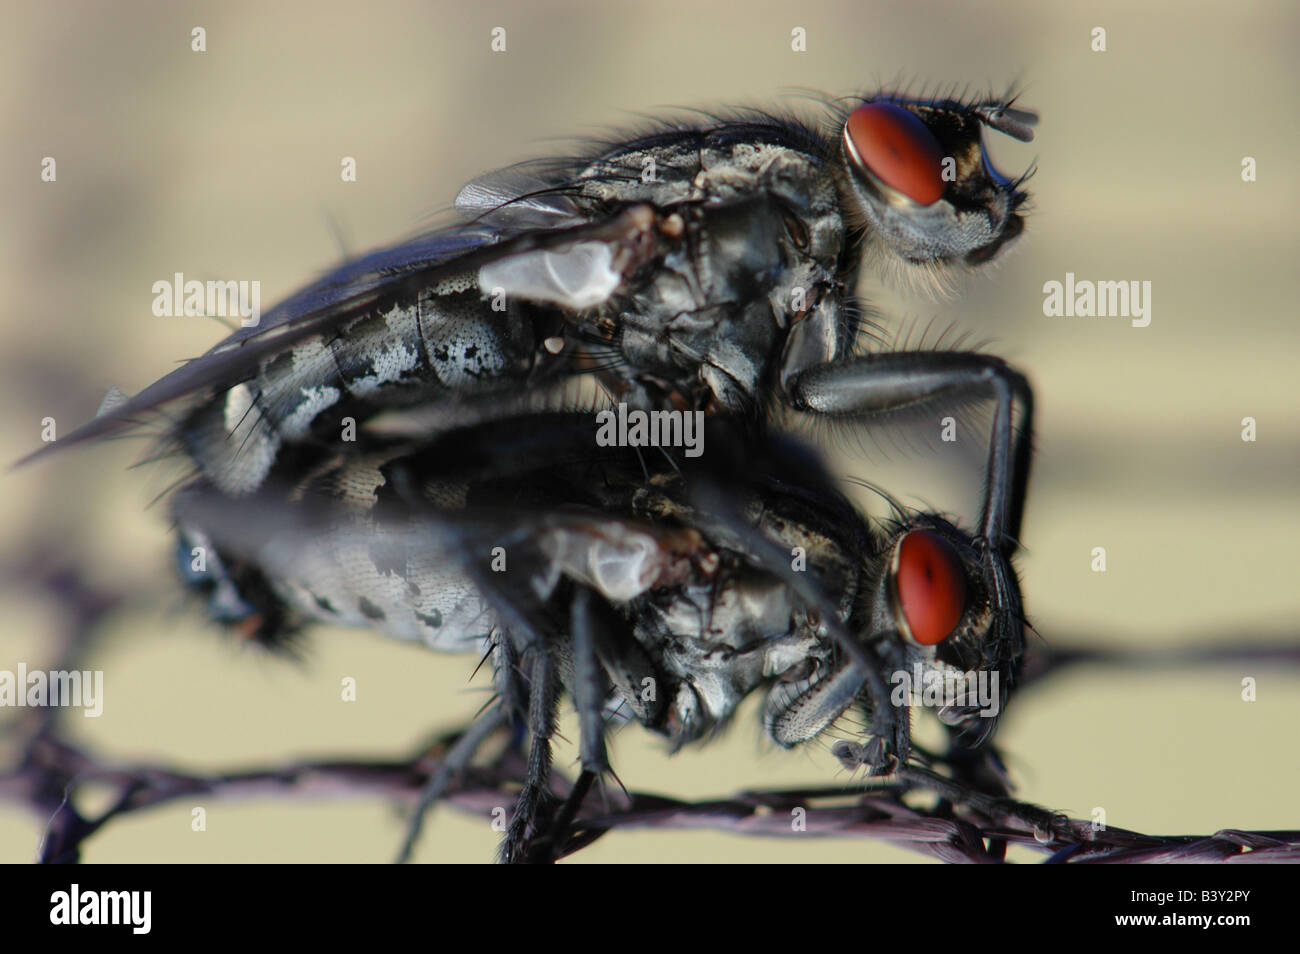 https://c8.alamy.com/comp/B3Y2PY/common-house-flies-mating-on-a-net-B3Y2PY.jpg